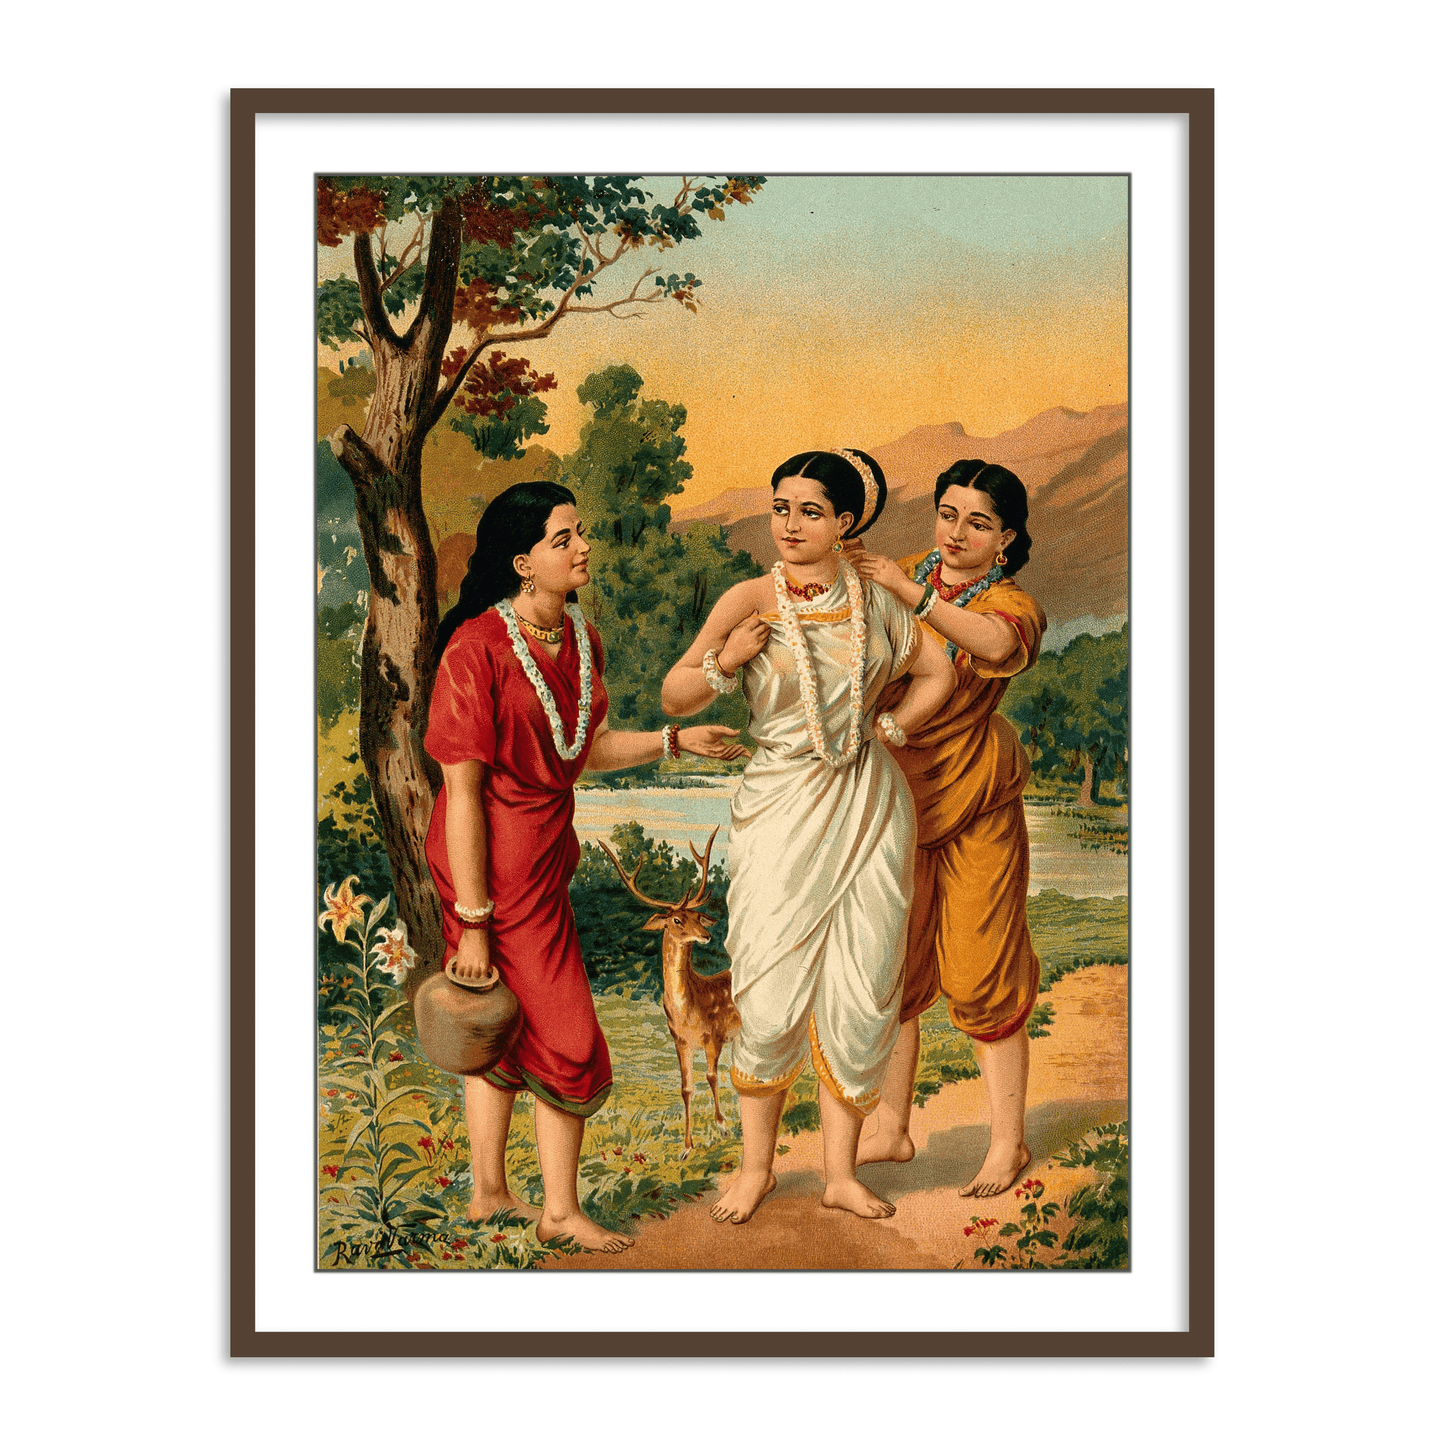 Shakuntala and her friends by Raja Ravi Varma Wall Painting for Home Decor